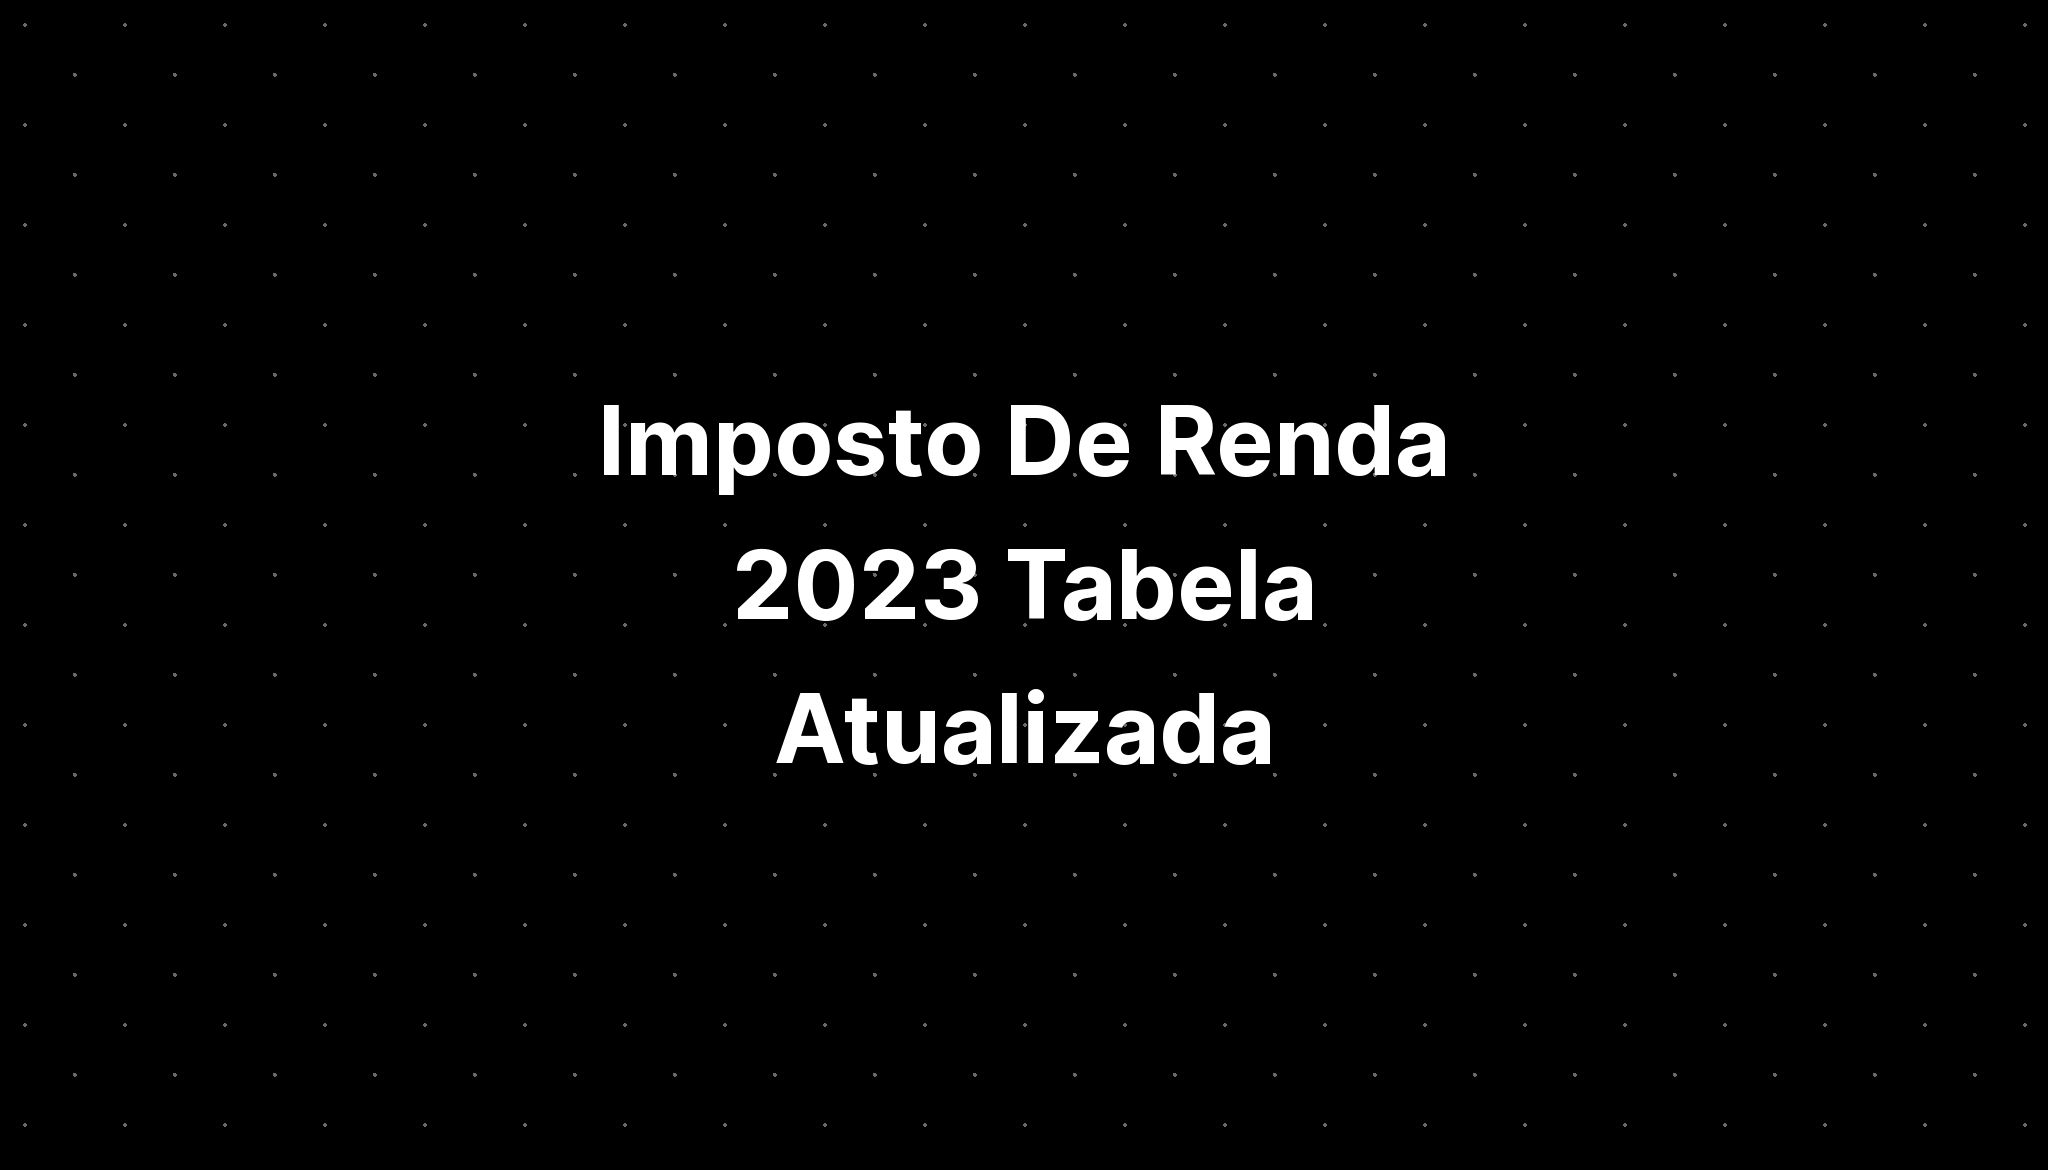 Imposto De Renda 2023 Tabela Atualizada Imagesee 4103